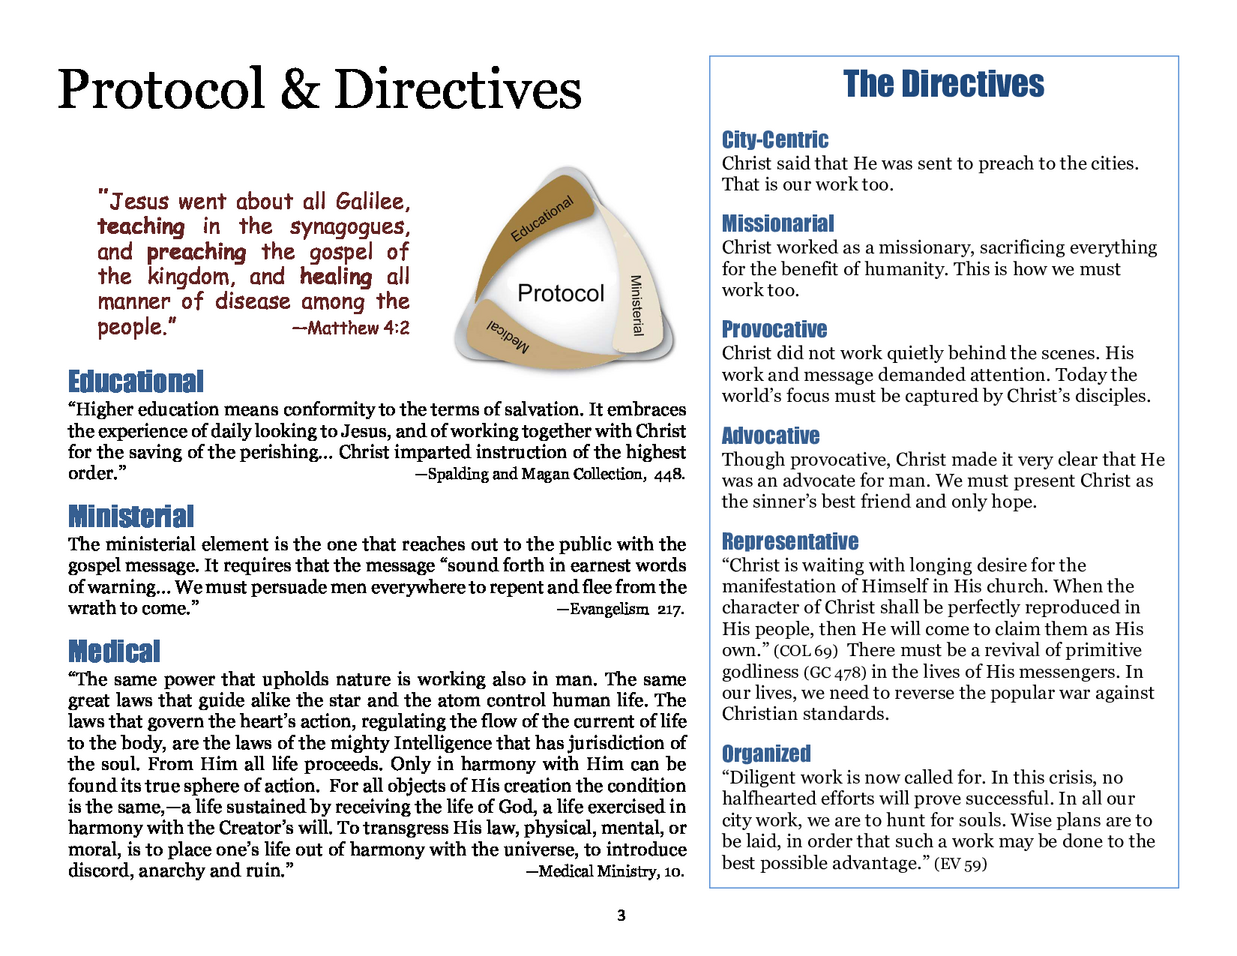 3_protocols_directives